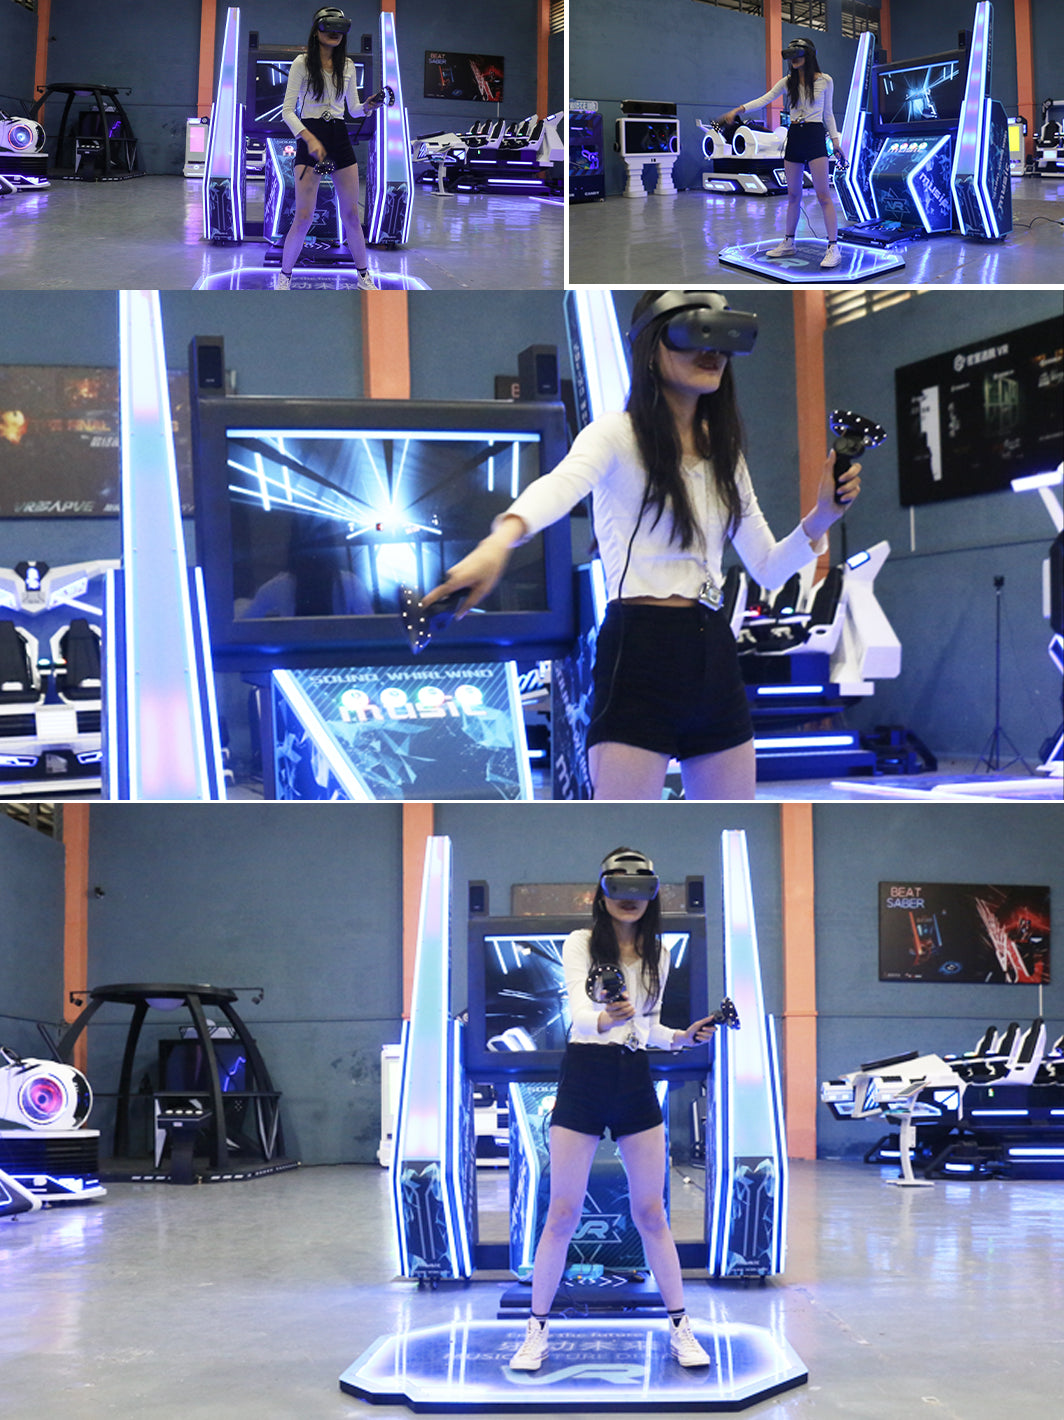 VR music & dancing - ShallxR